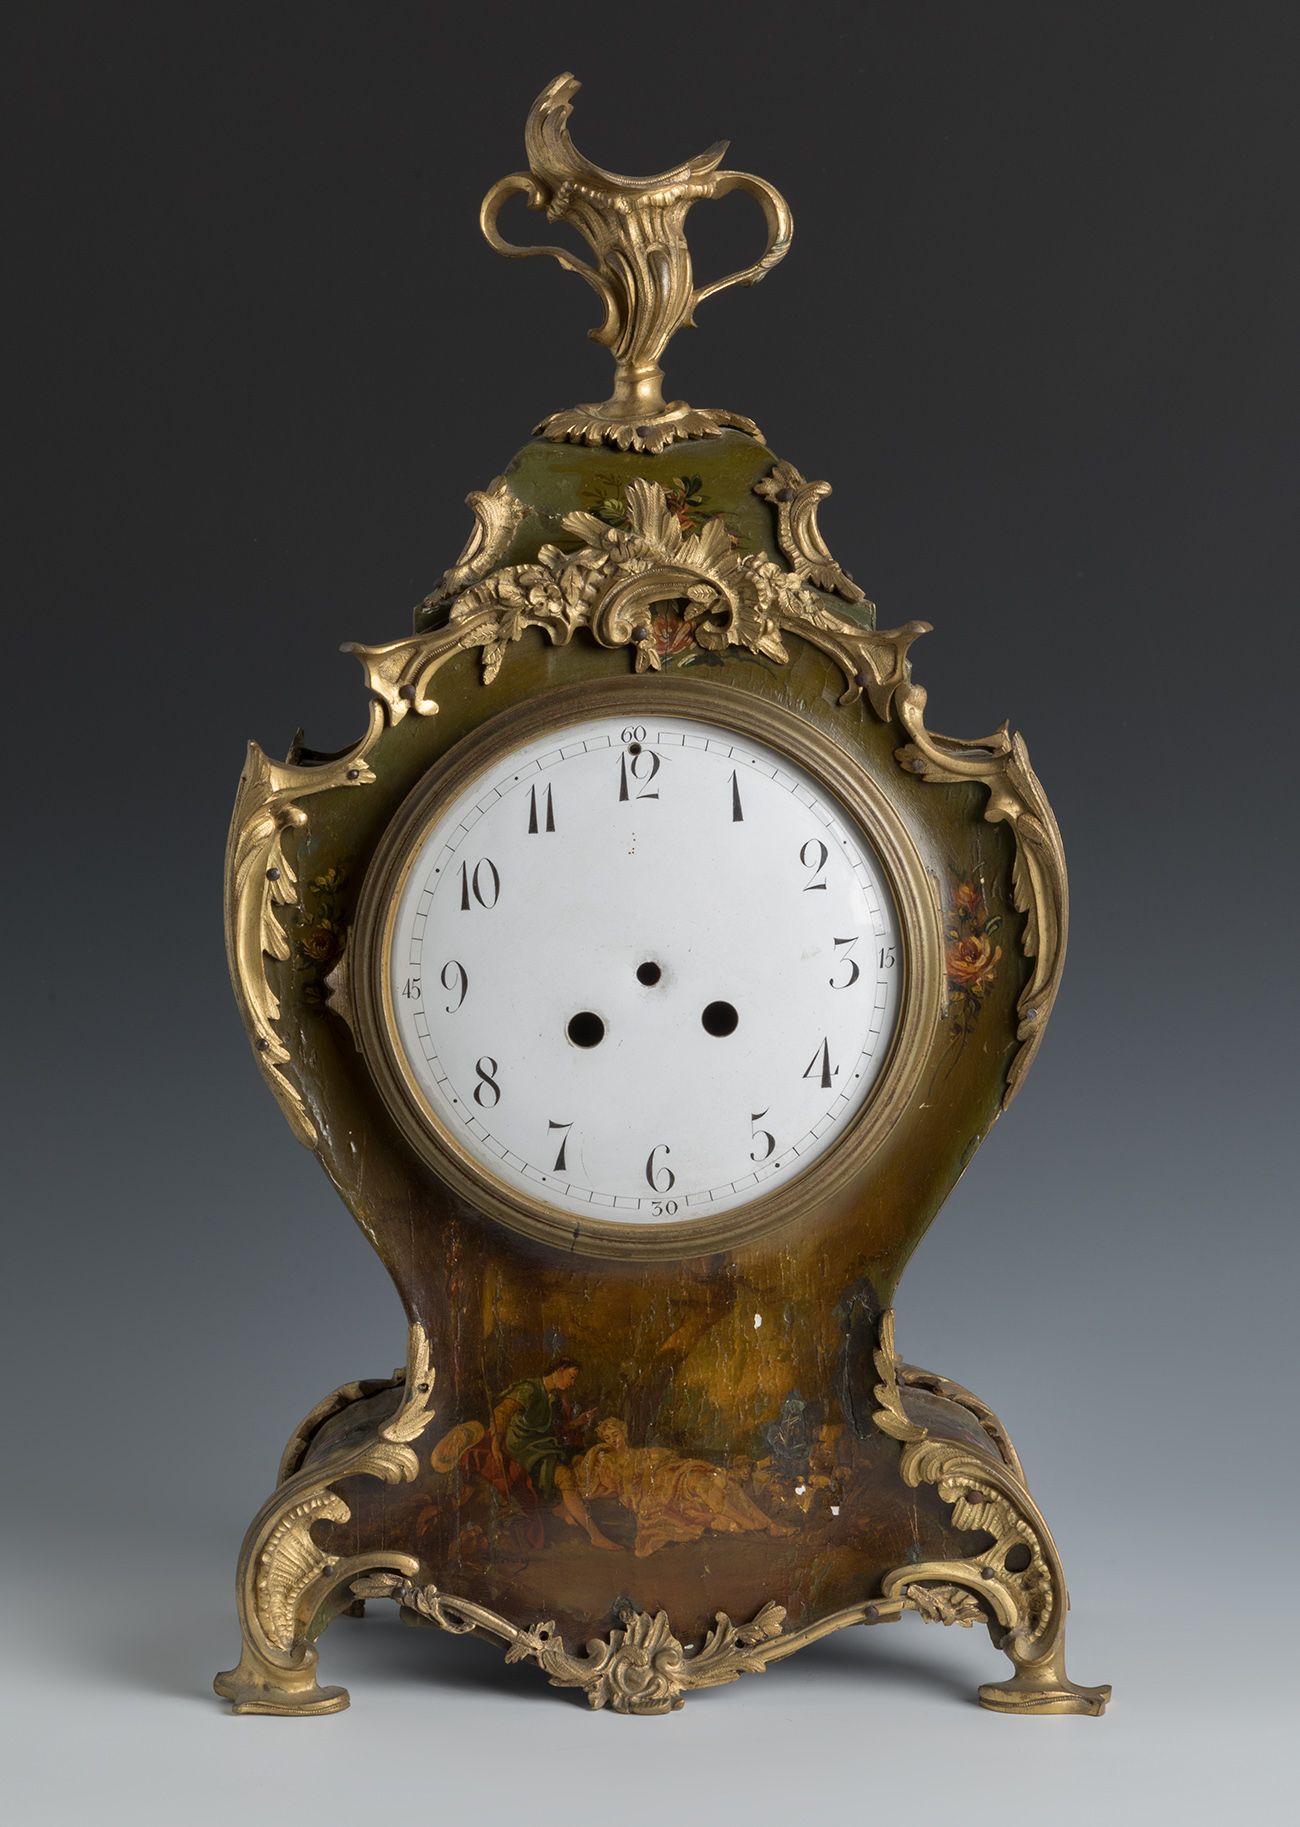 Null Uhr im Rokoko-Stil. Frankreich, 19. Jahrhundert.
Polychromes Holz und Bronz&hellip;